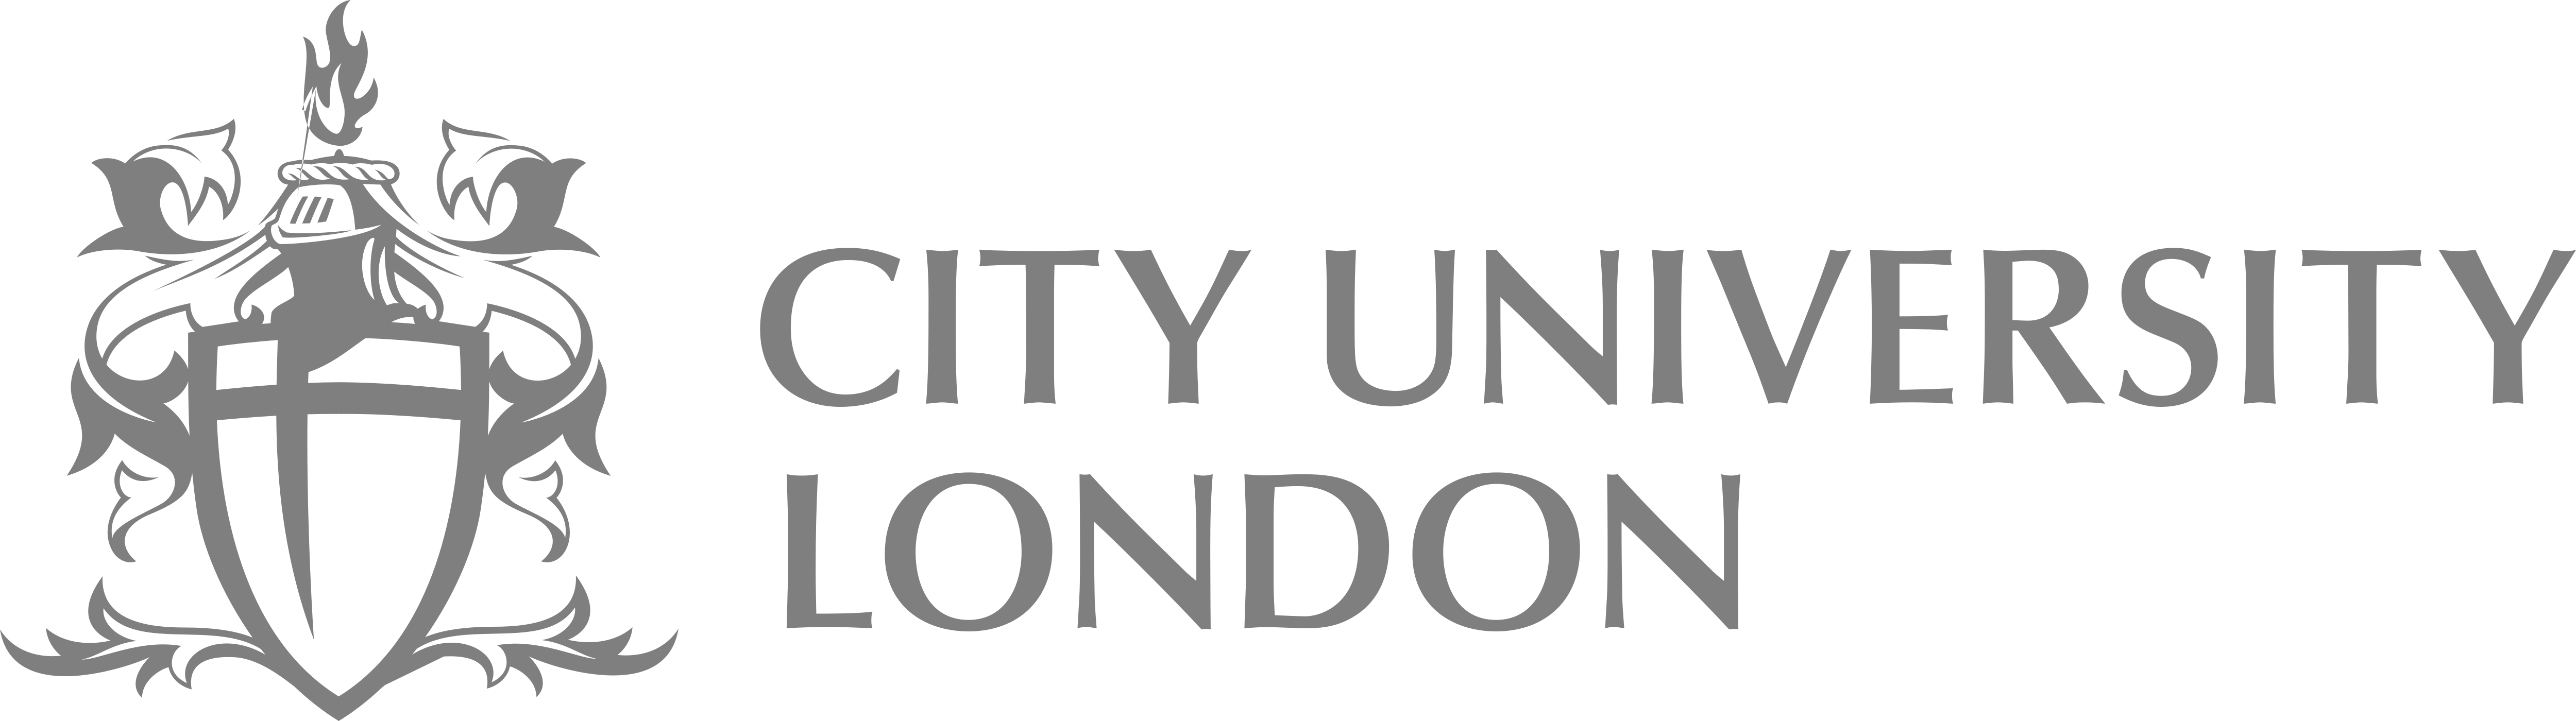 city, university of london brand logo